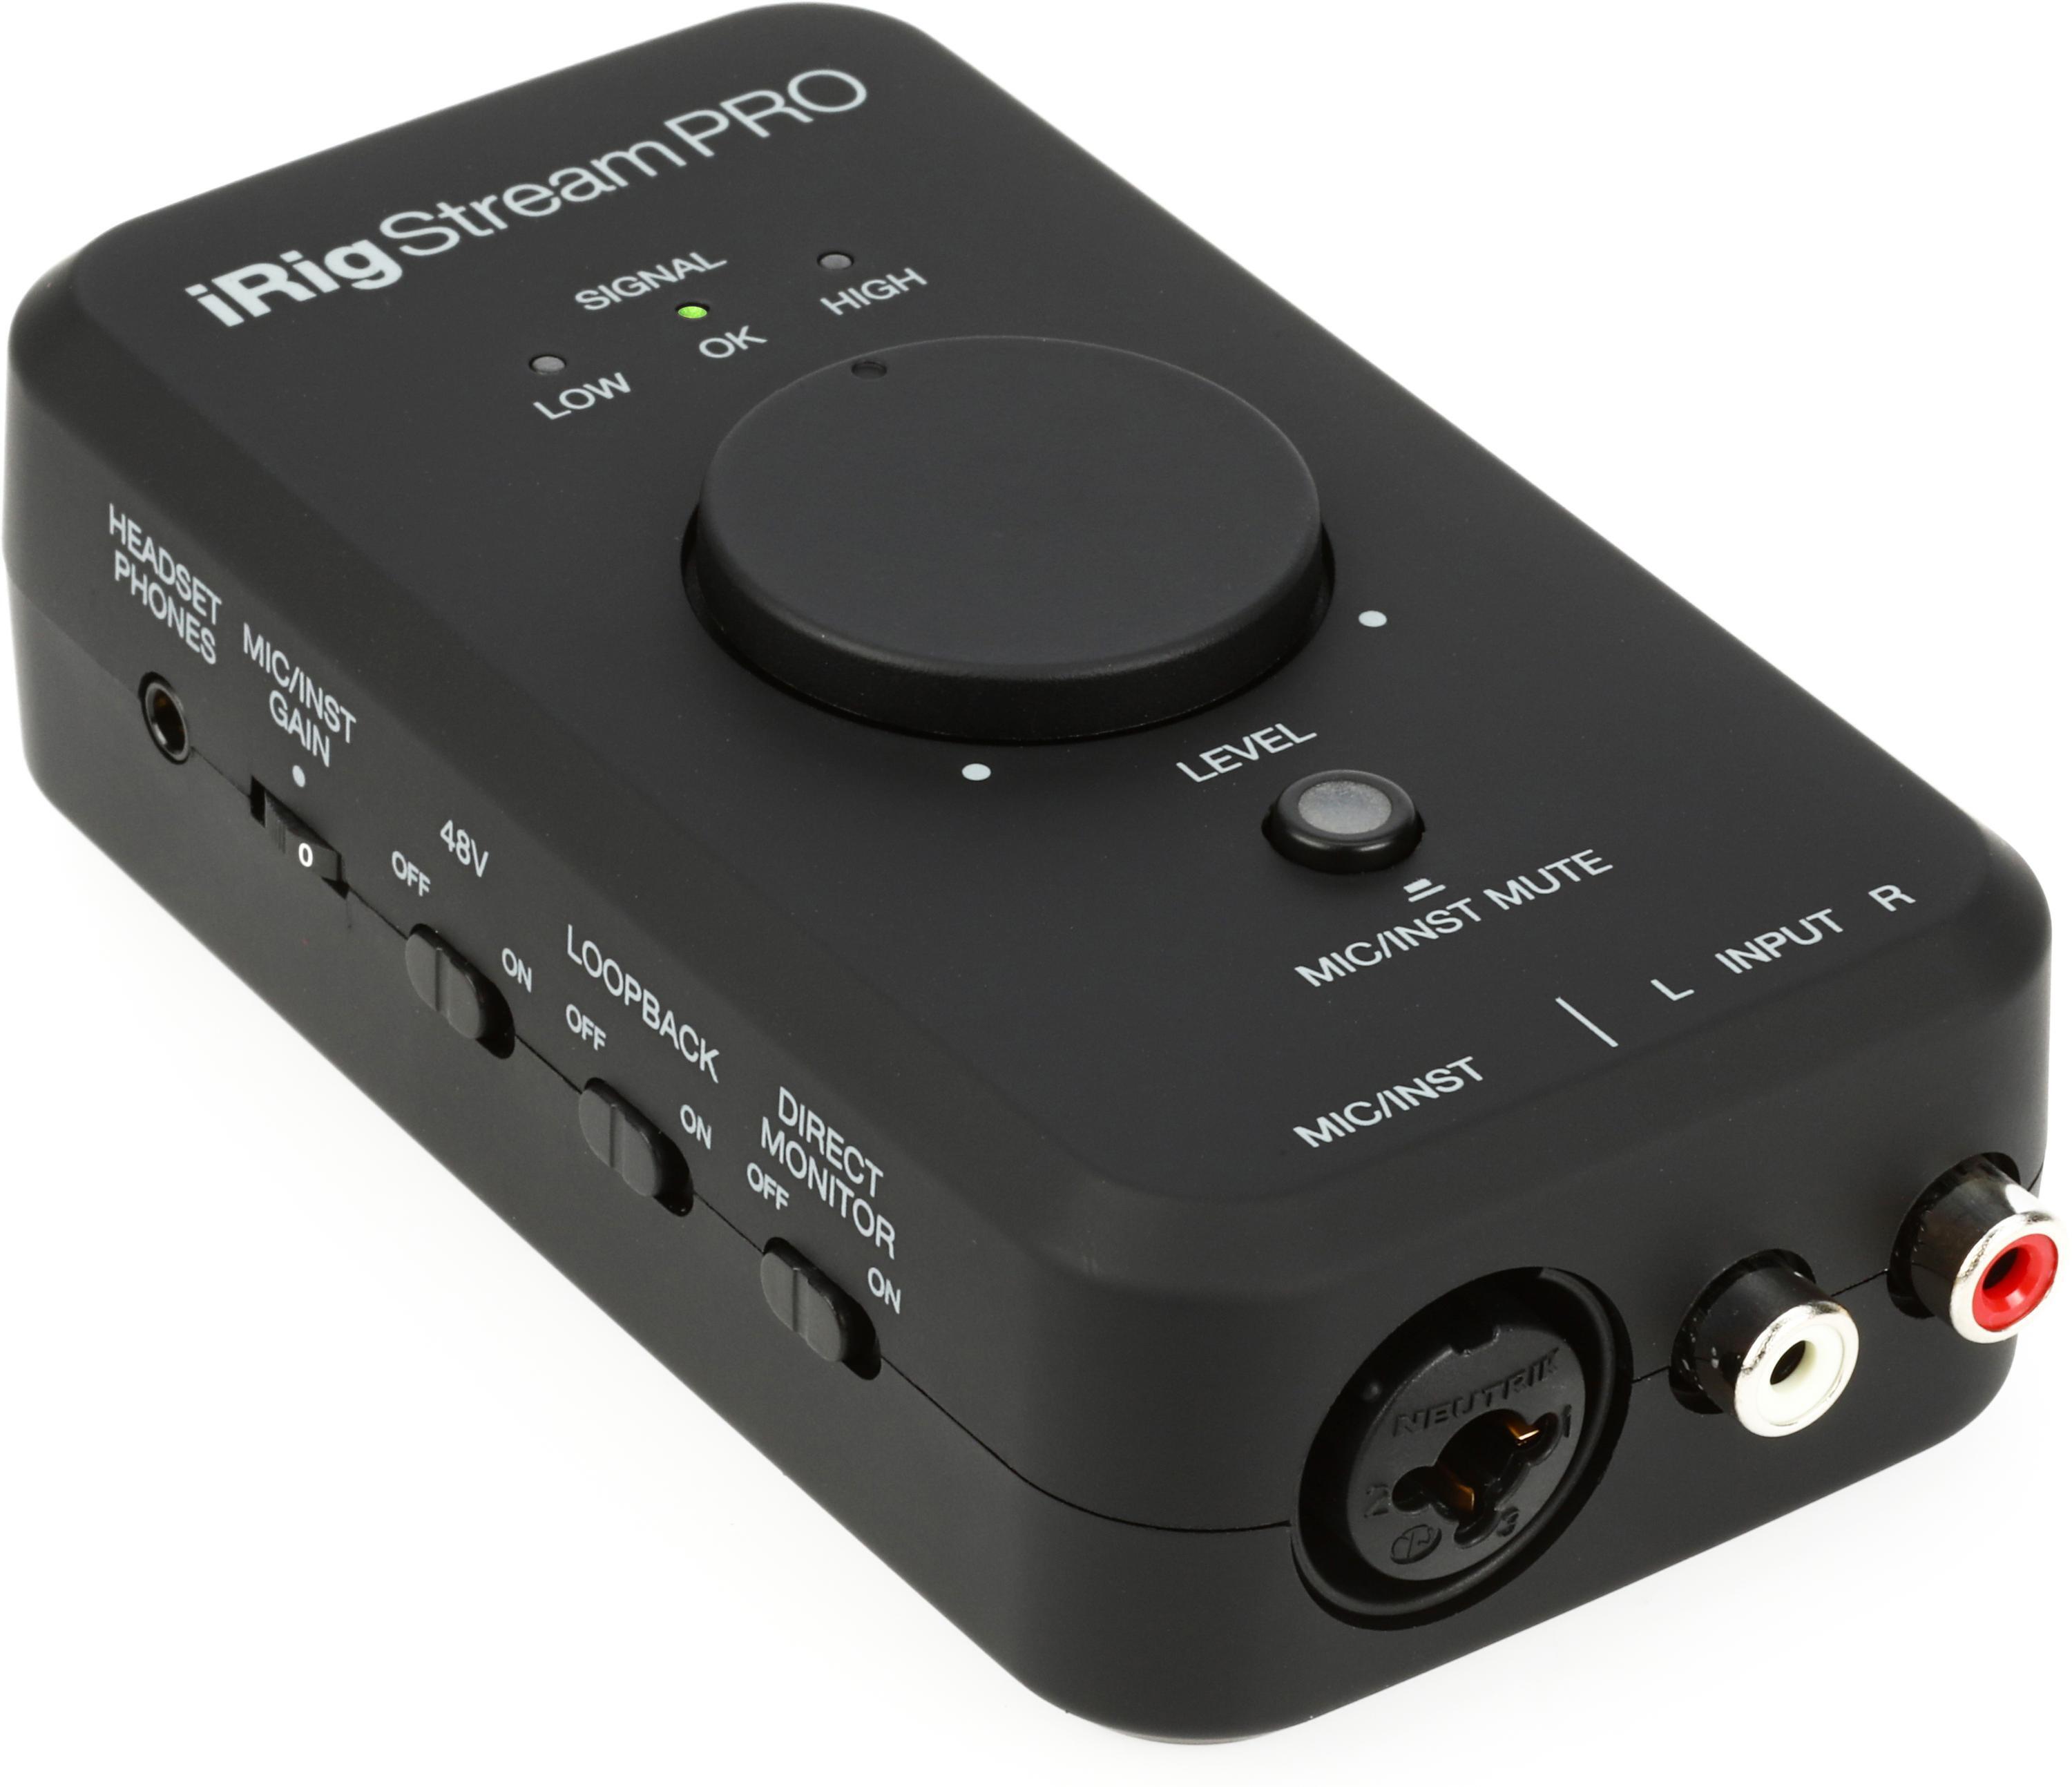 Bundled Item: IK Multimedia iRig Stream Pro - Streaming Audio Interface for iOS, Android, Mac/PC